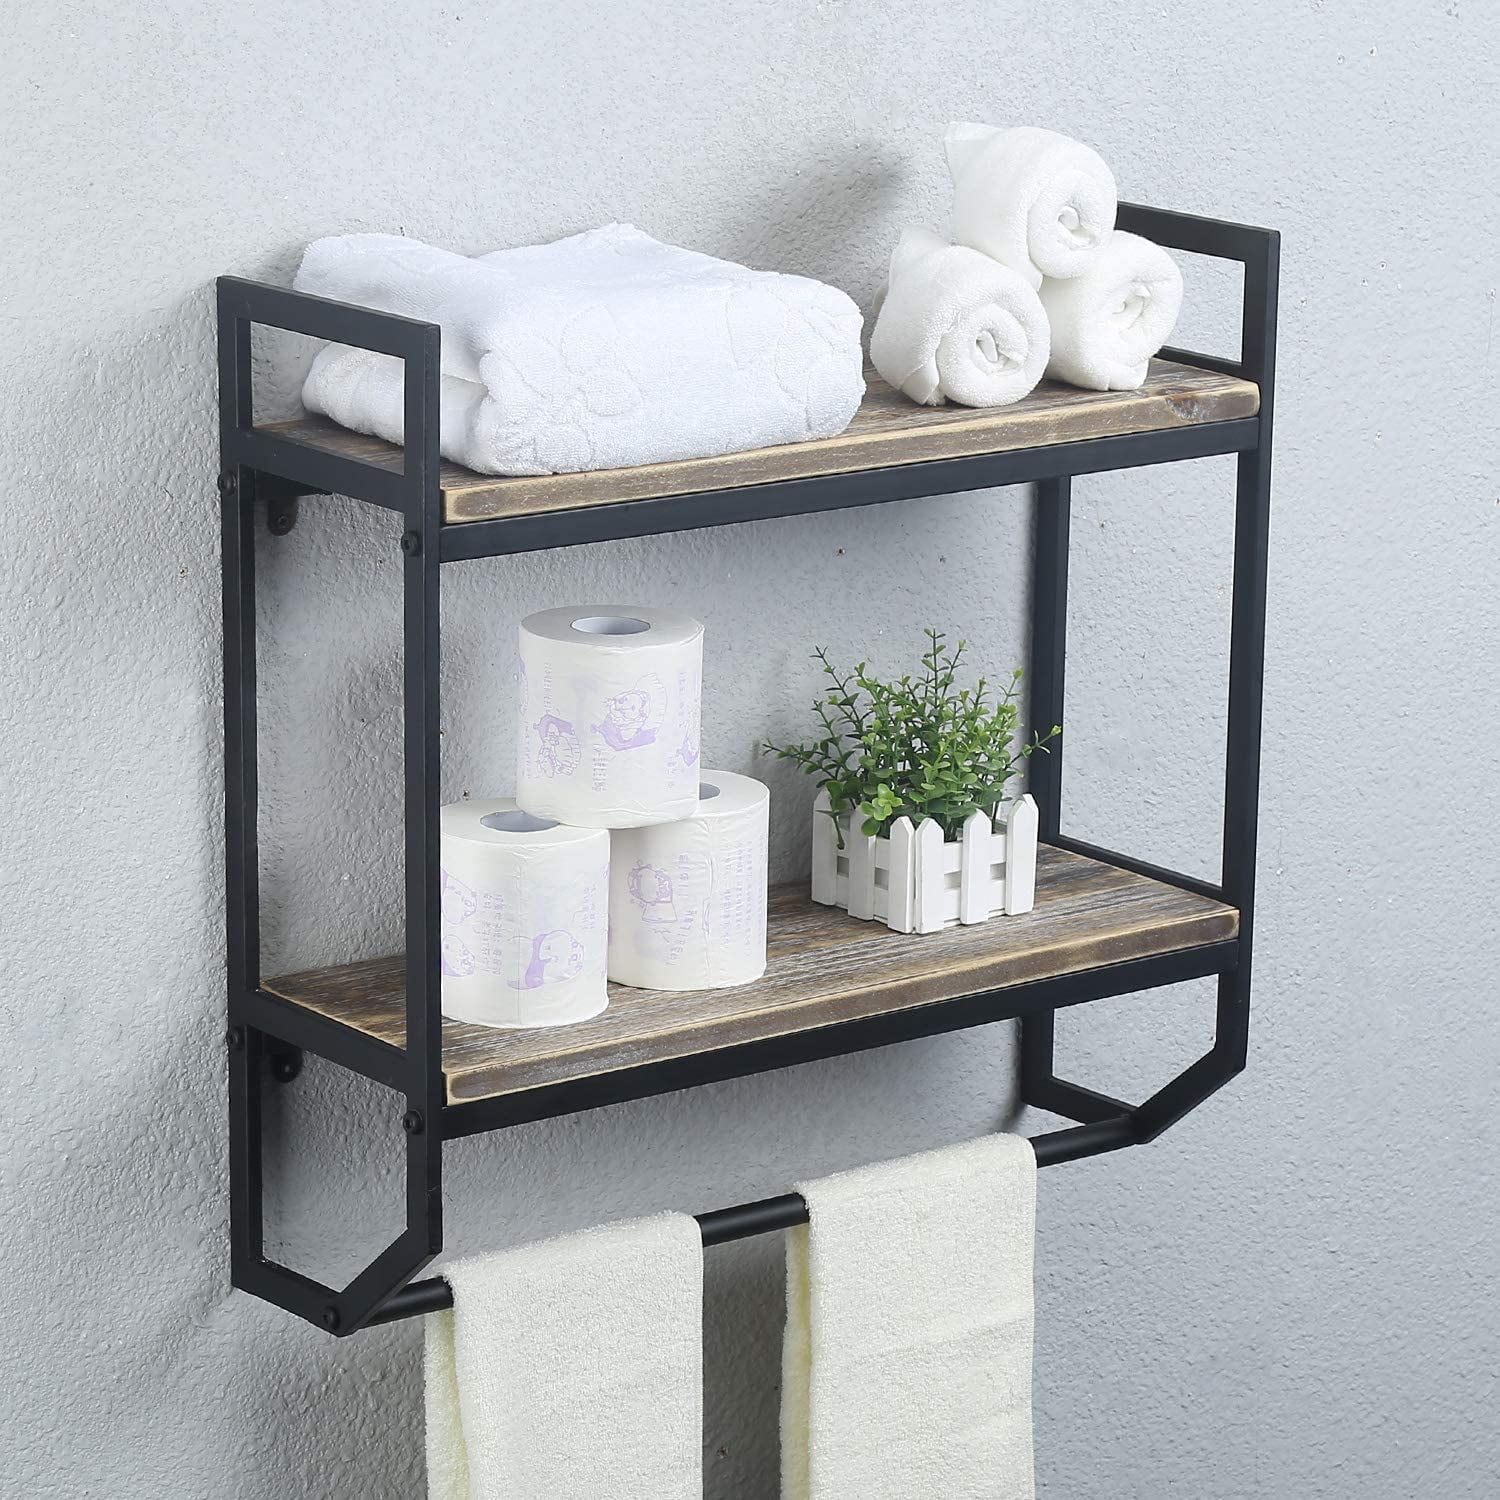 Yorede Bathroom Shelf Storage Rack With Towel Bar Wall Shelves